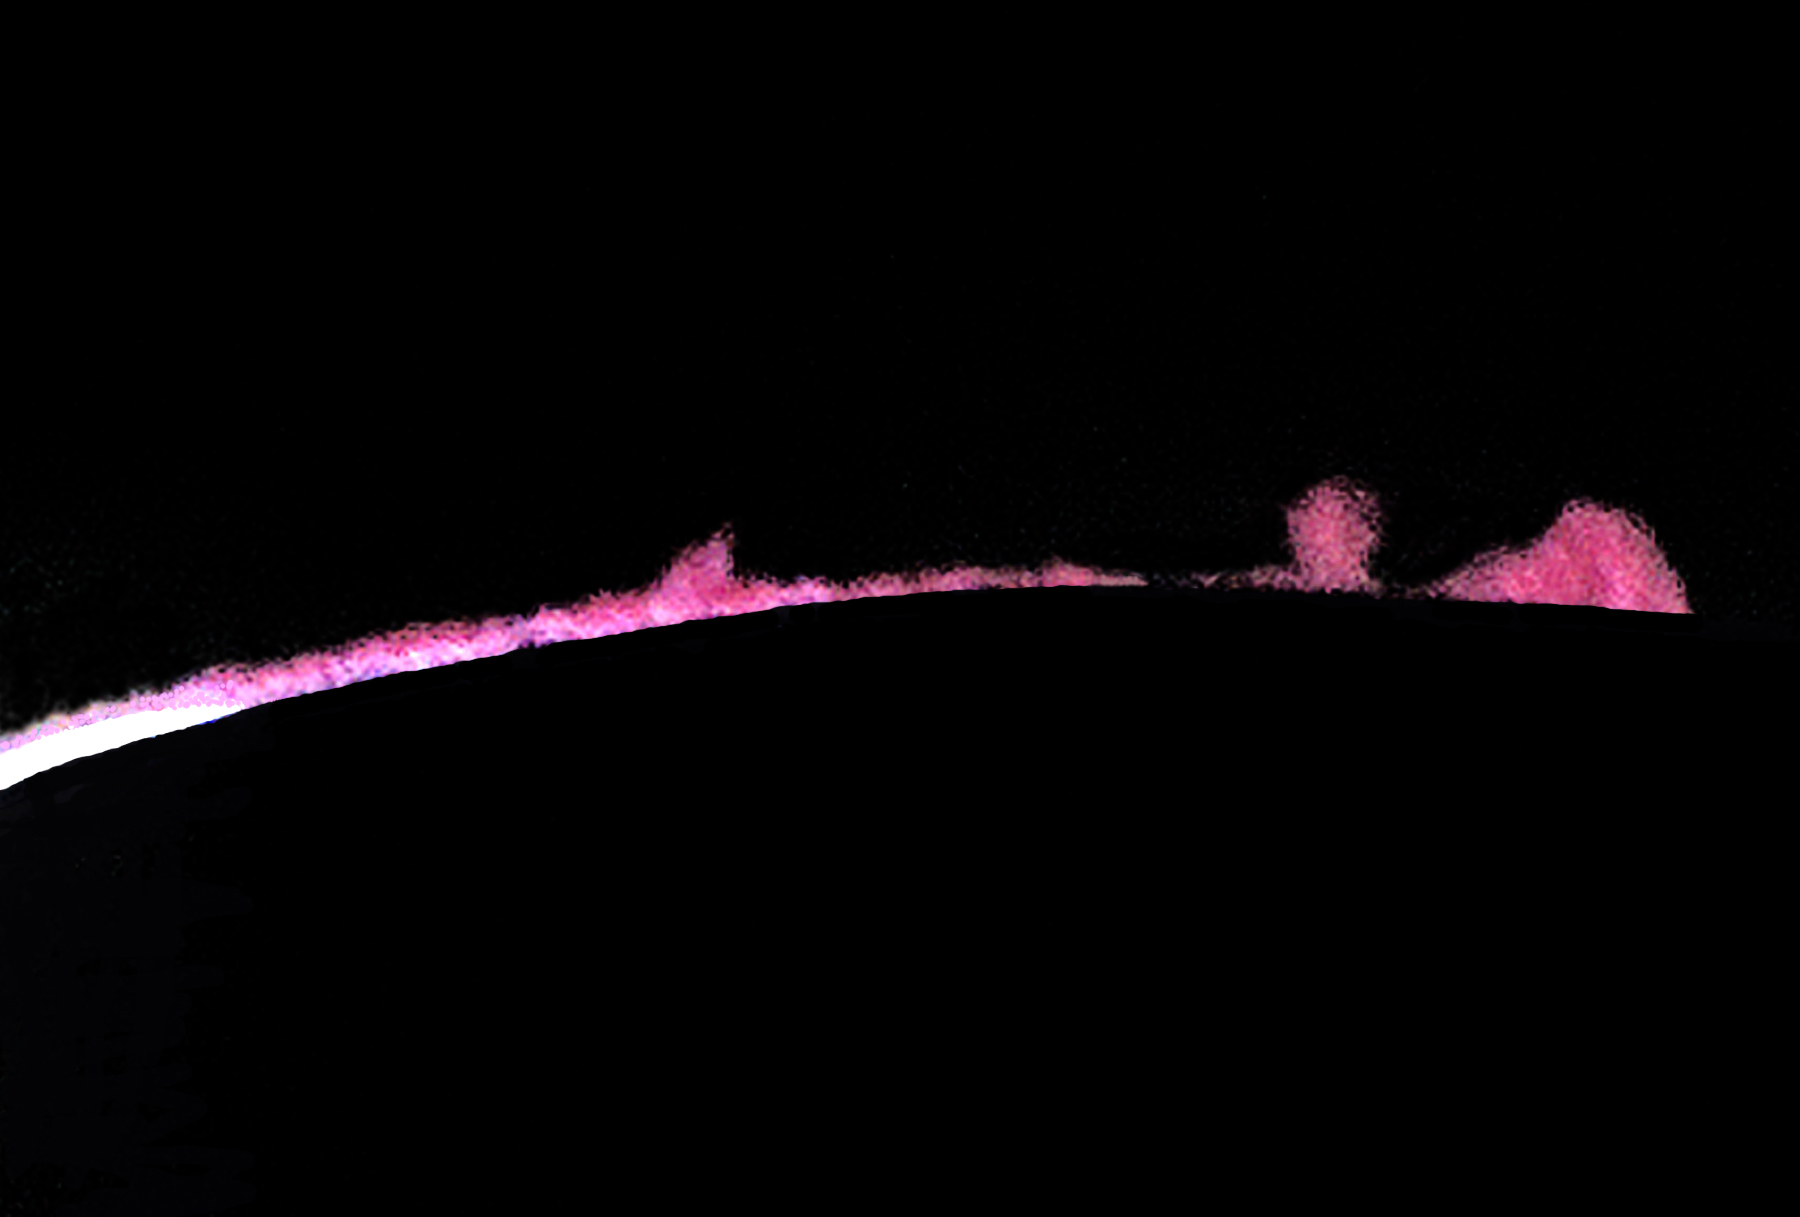 Eclipse 2012 - A89 - Prominences -2012